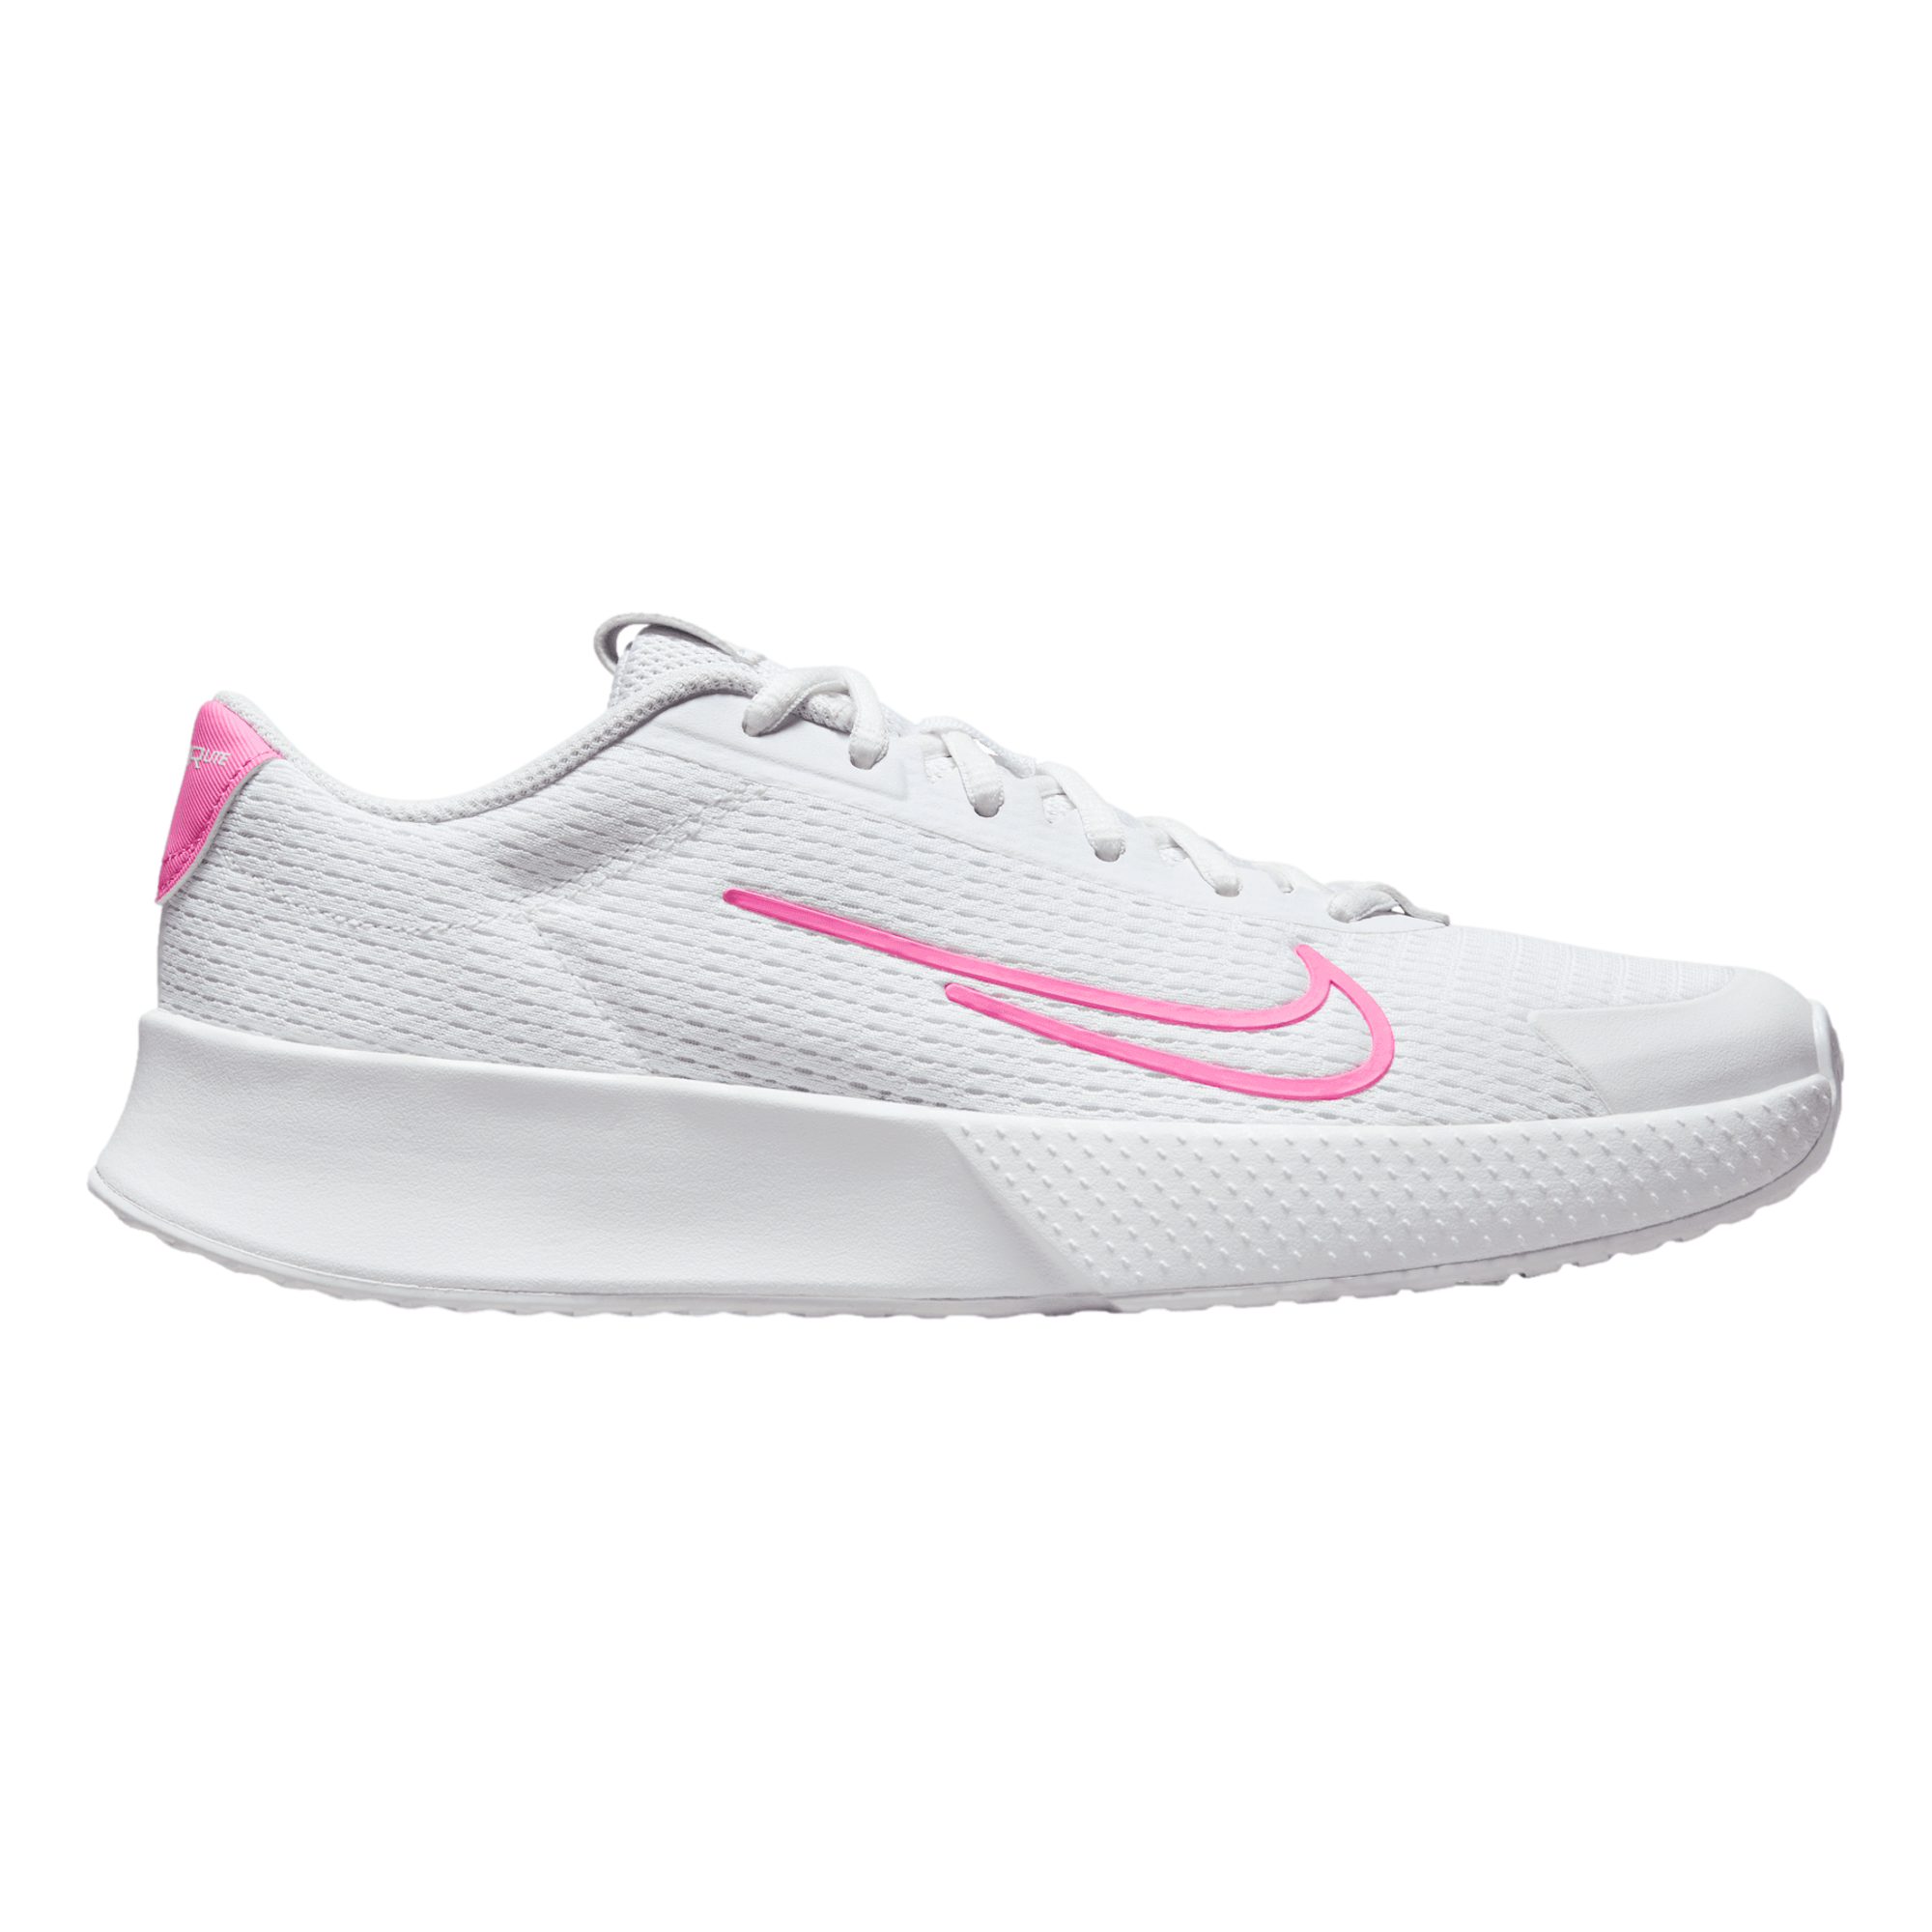 NikeCourt Vapor Lite 2 Women's Tennis Shoe